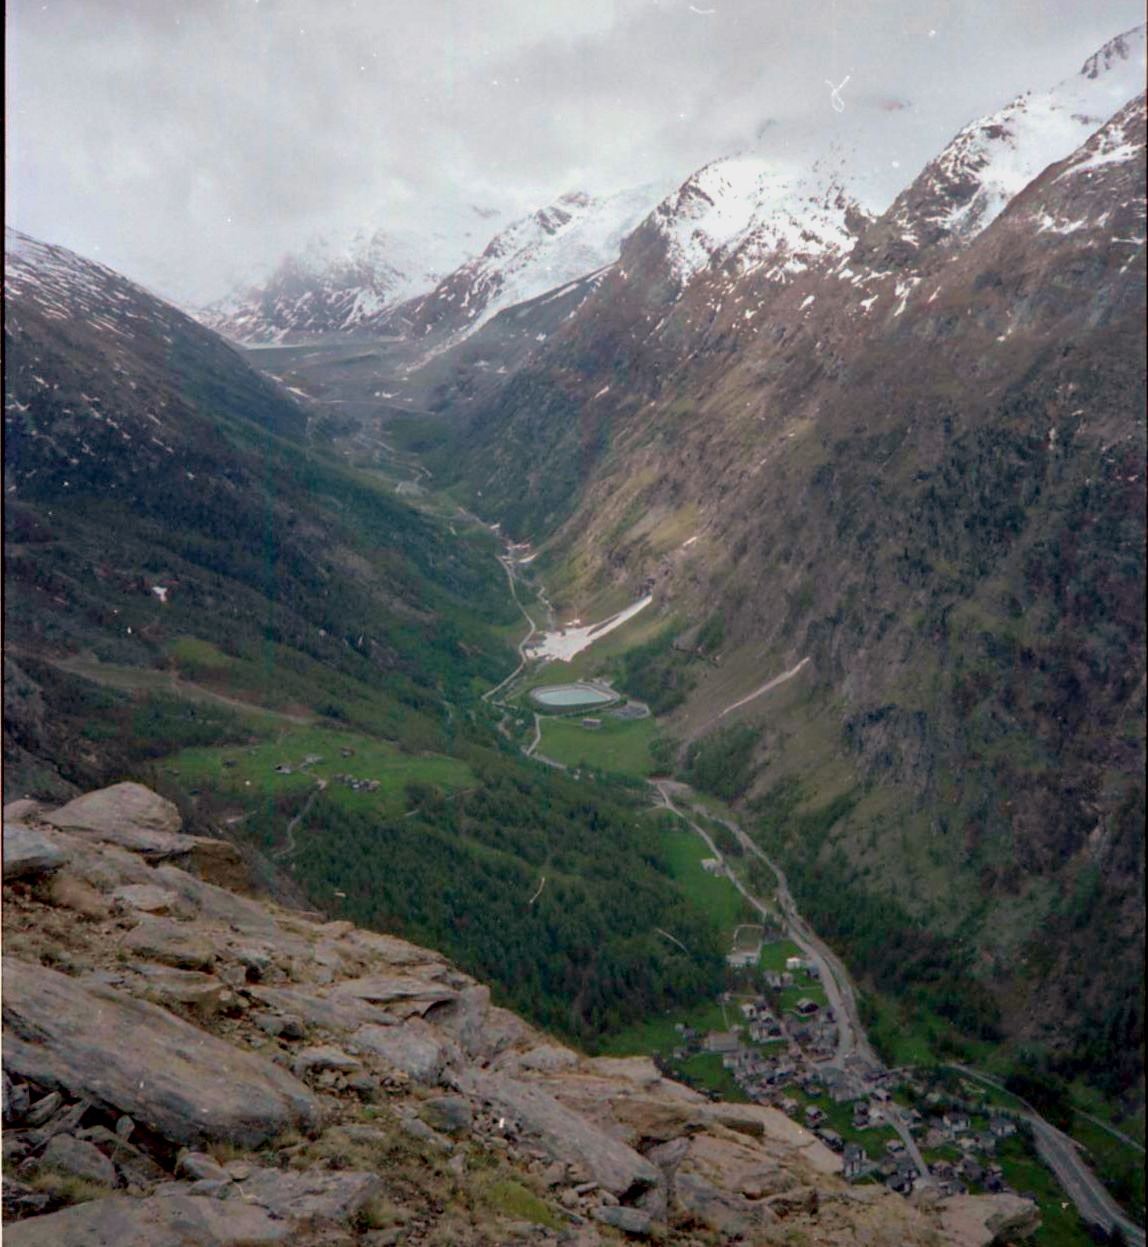 Saas Valley in the Valais Region